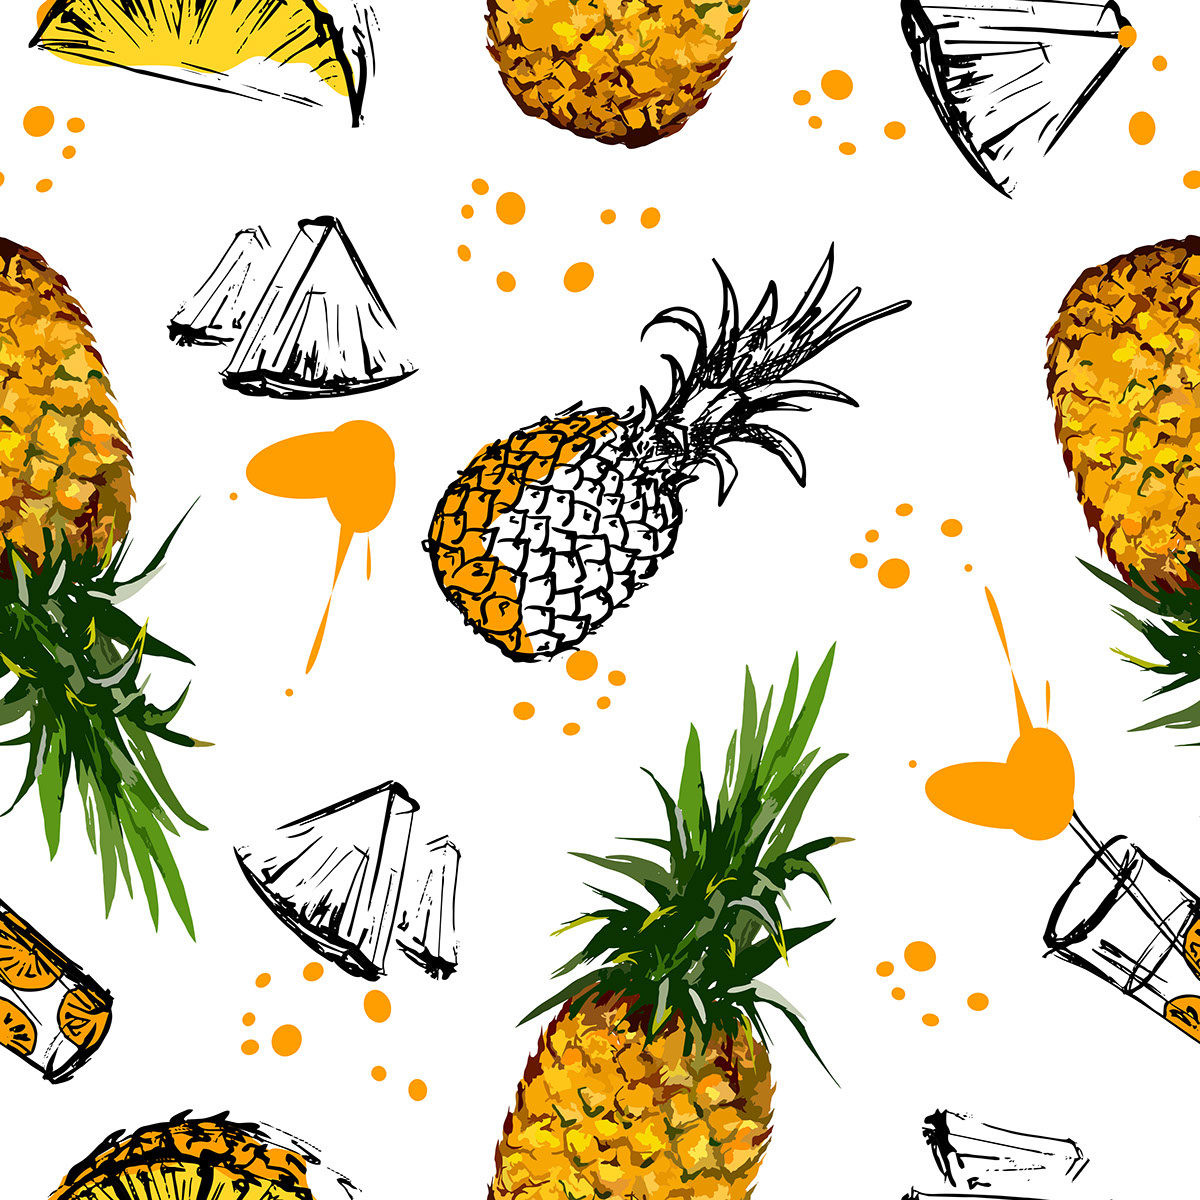 Luscious pineapple illustrations rendition image